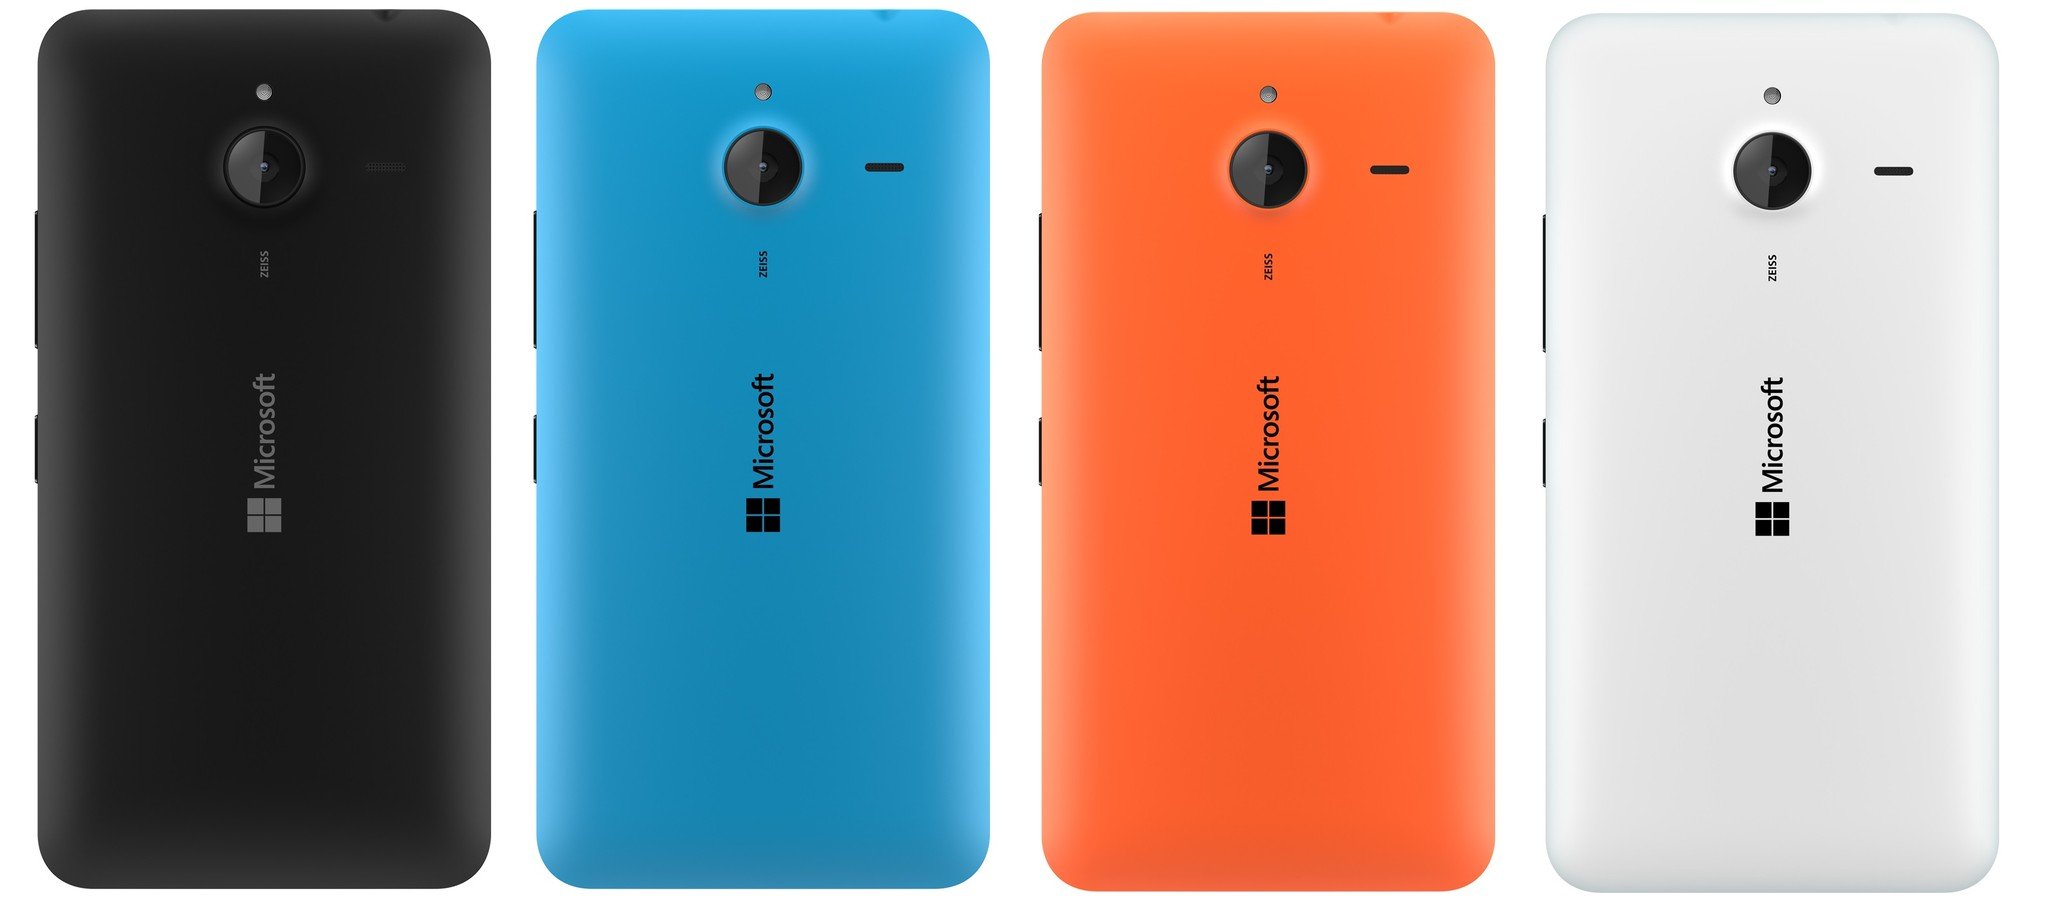 Lumia-640XL-Press-Covers-colors.jpg?itok